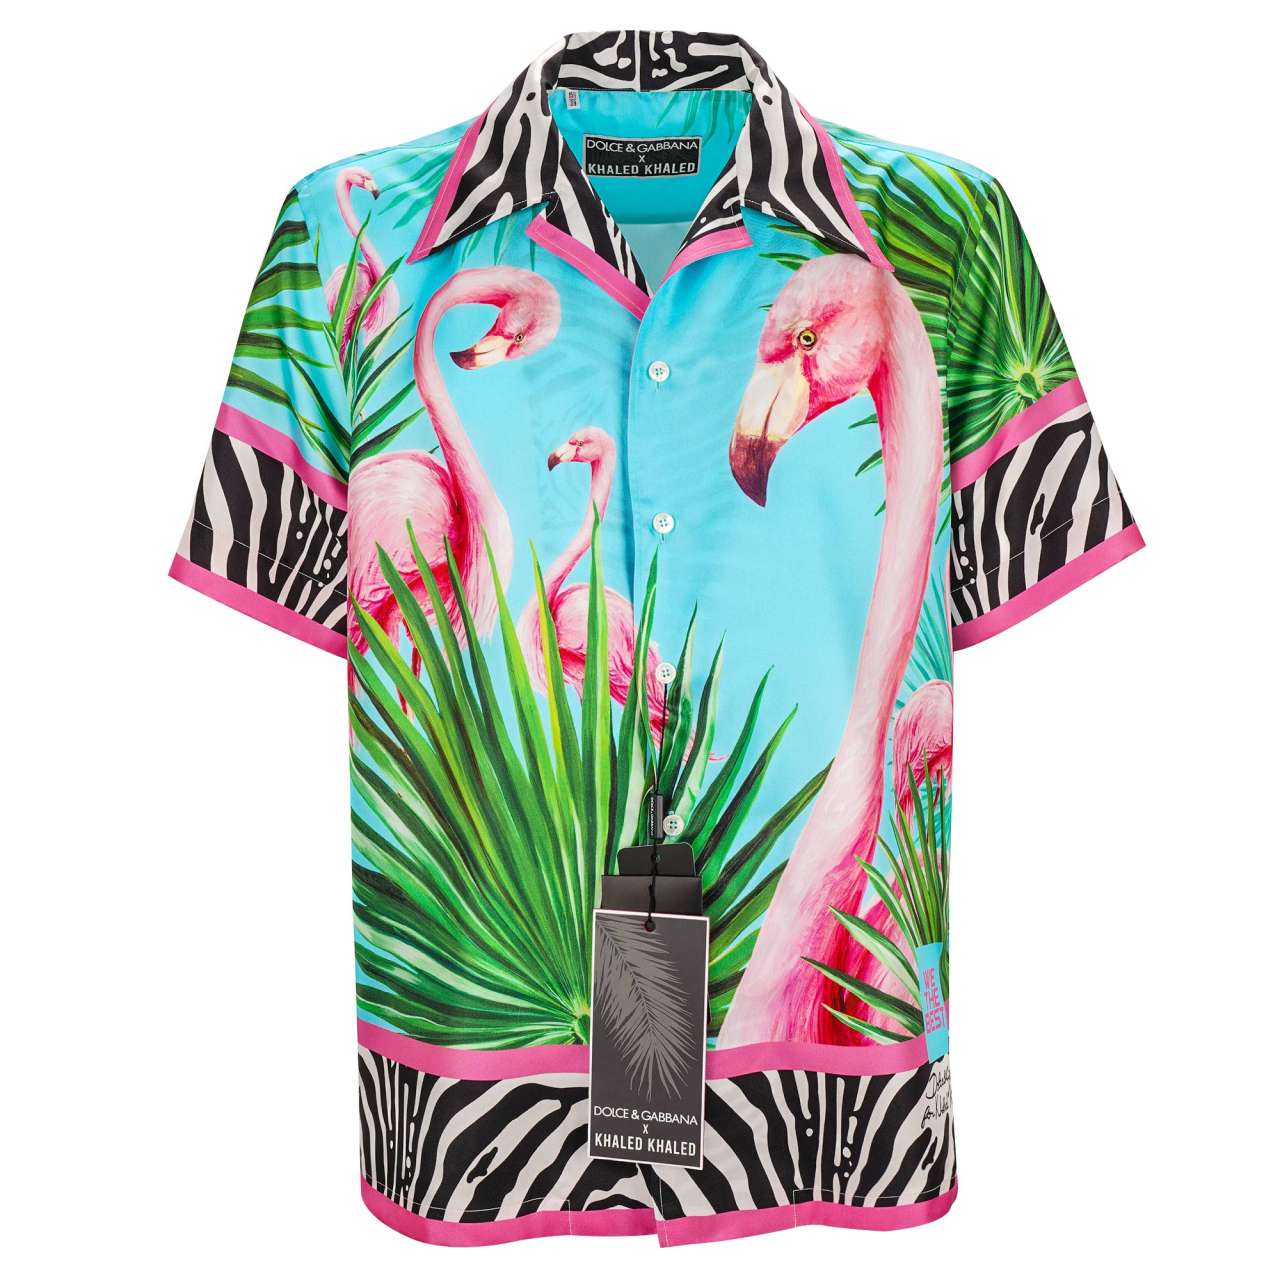 Dolce & Gabbana - DJ Khaled Silk Flamingo Zebra Shirt with Sunglasses and CD 38 For Sale